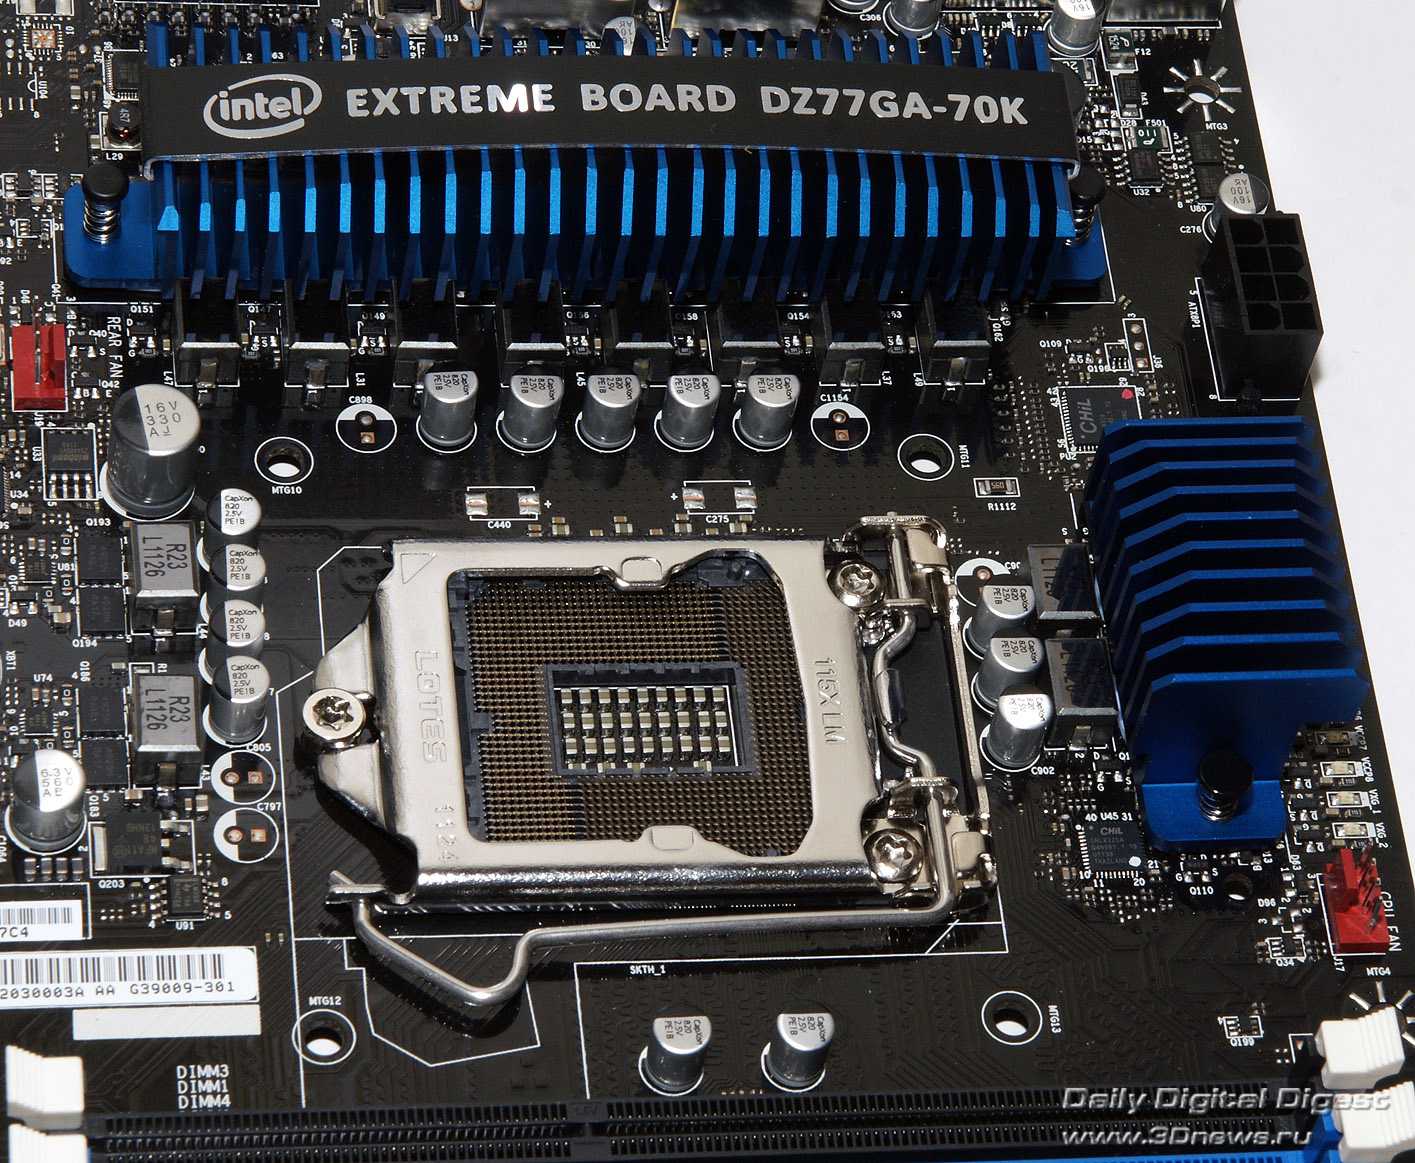 Intel dz77ga-70k motherboard review